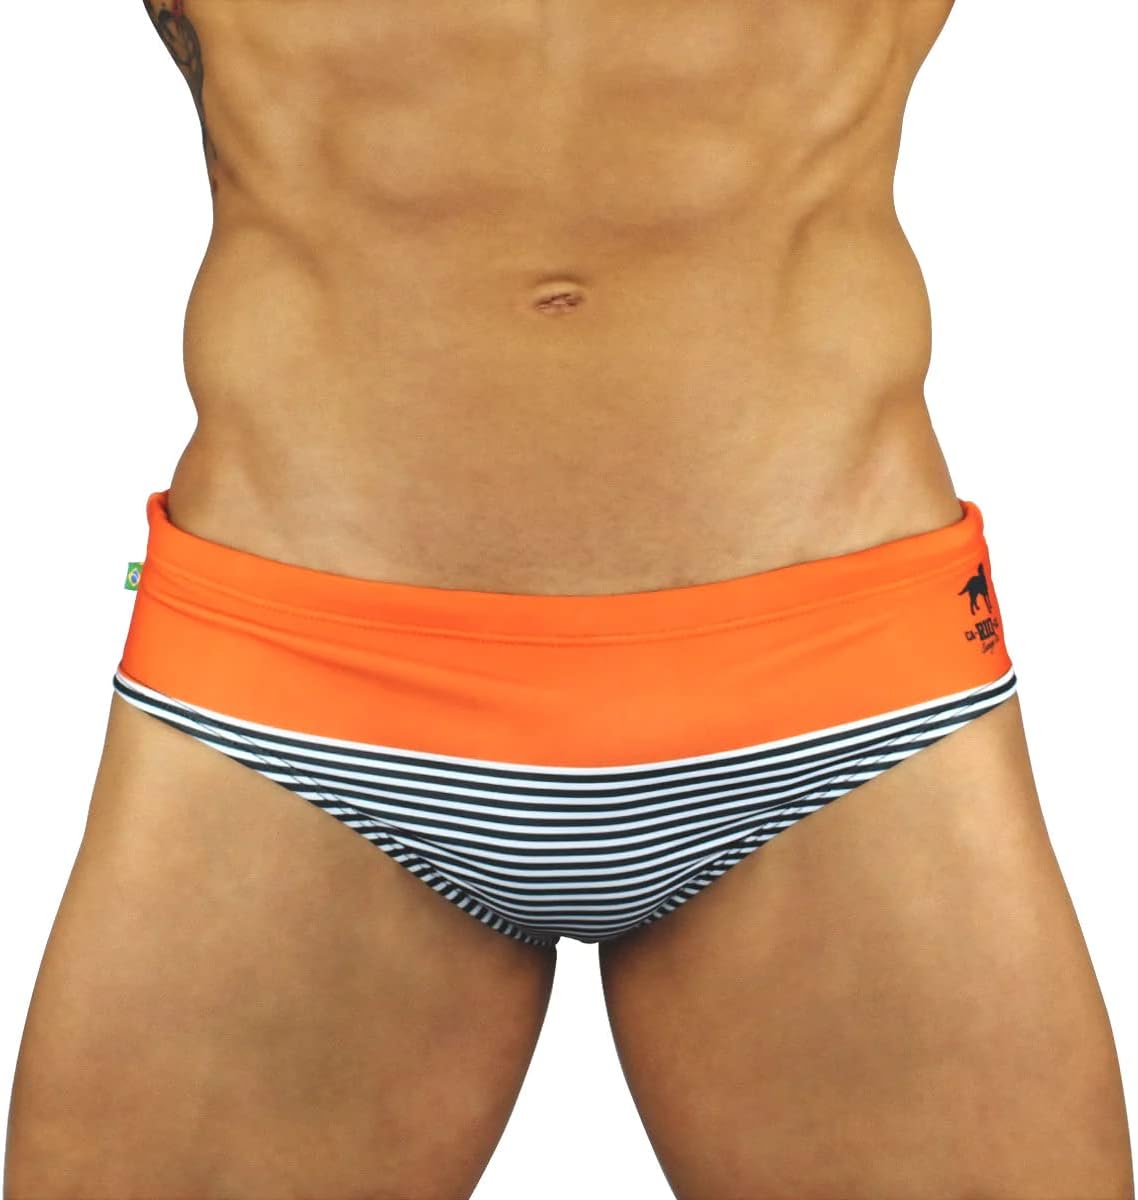 Gradient Stripes - Men's Designer Swimwear - CLEARANCE / FINAL SALES